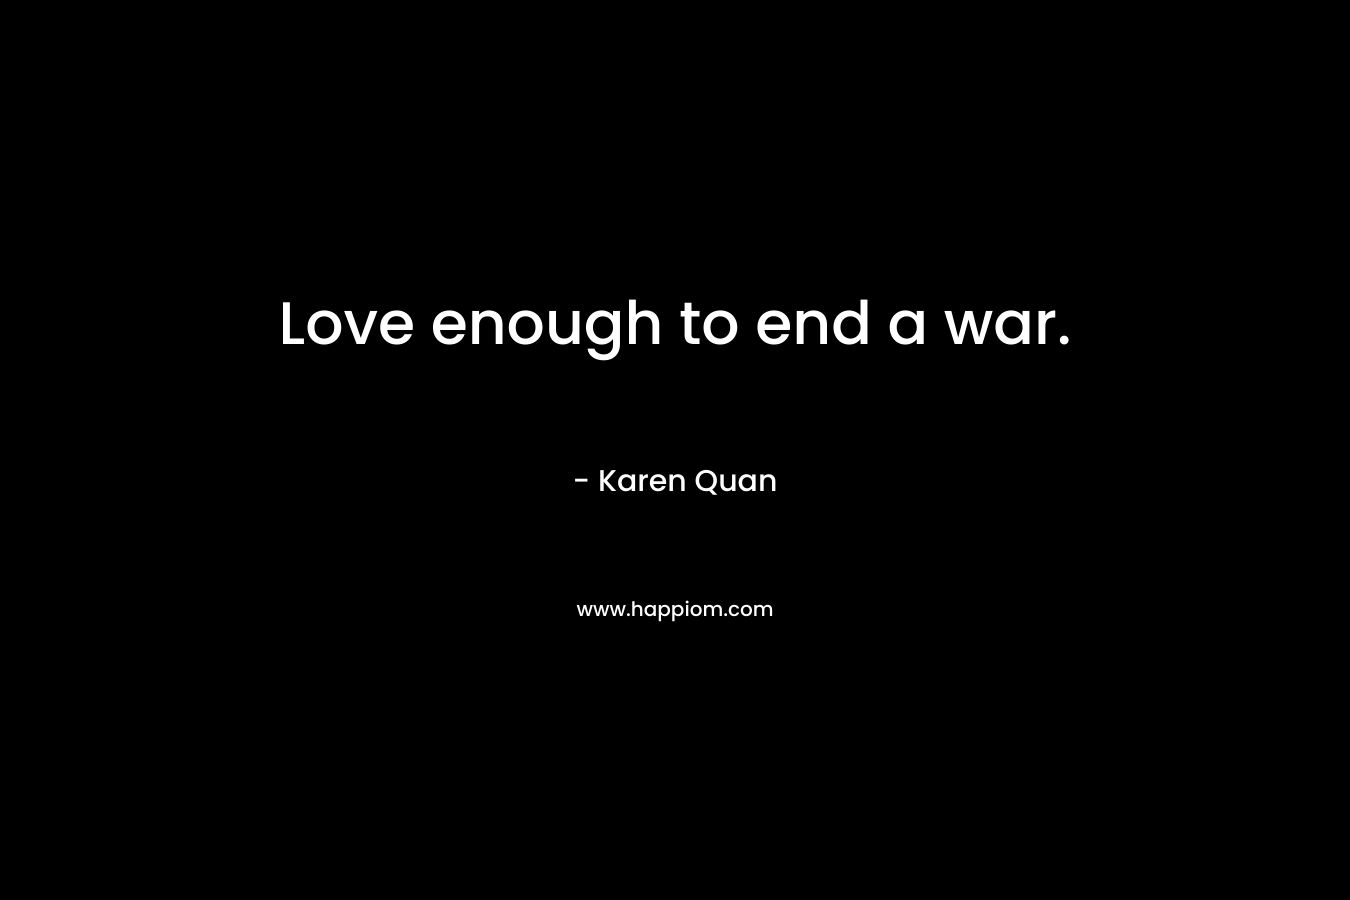 Love enough to end a war.